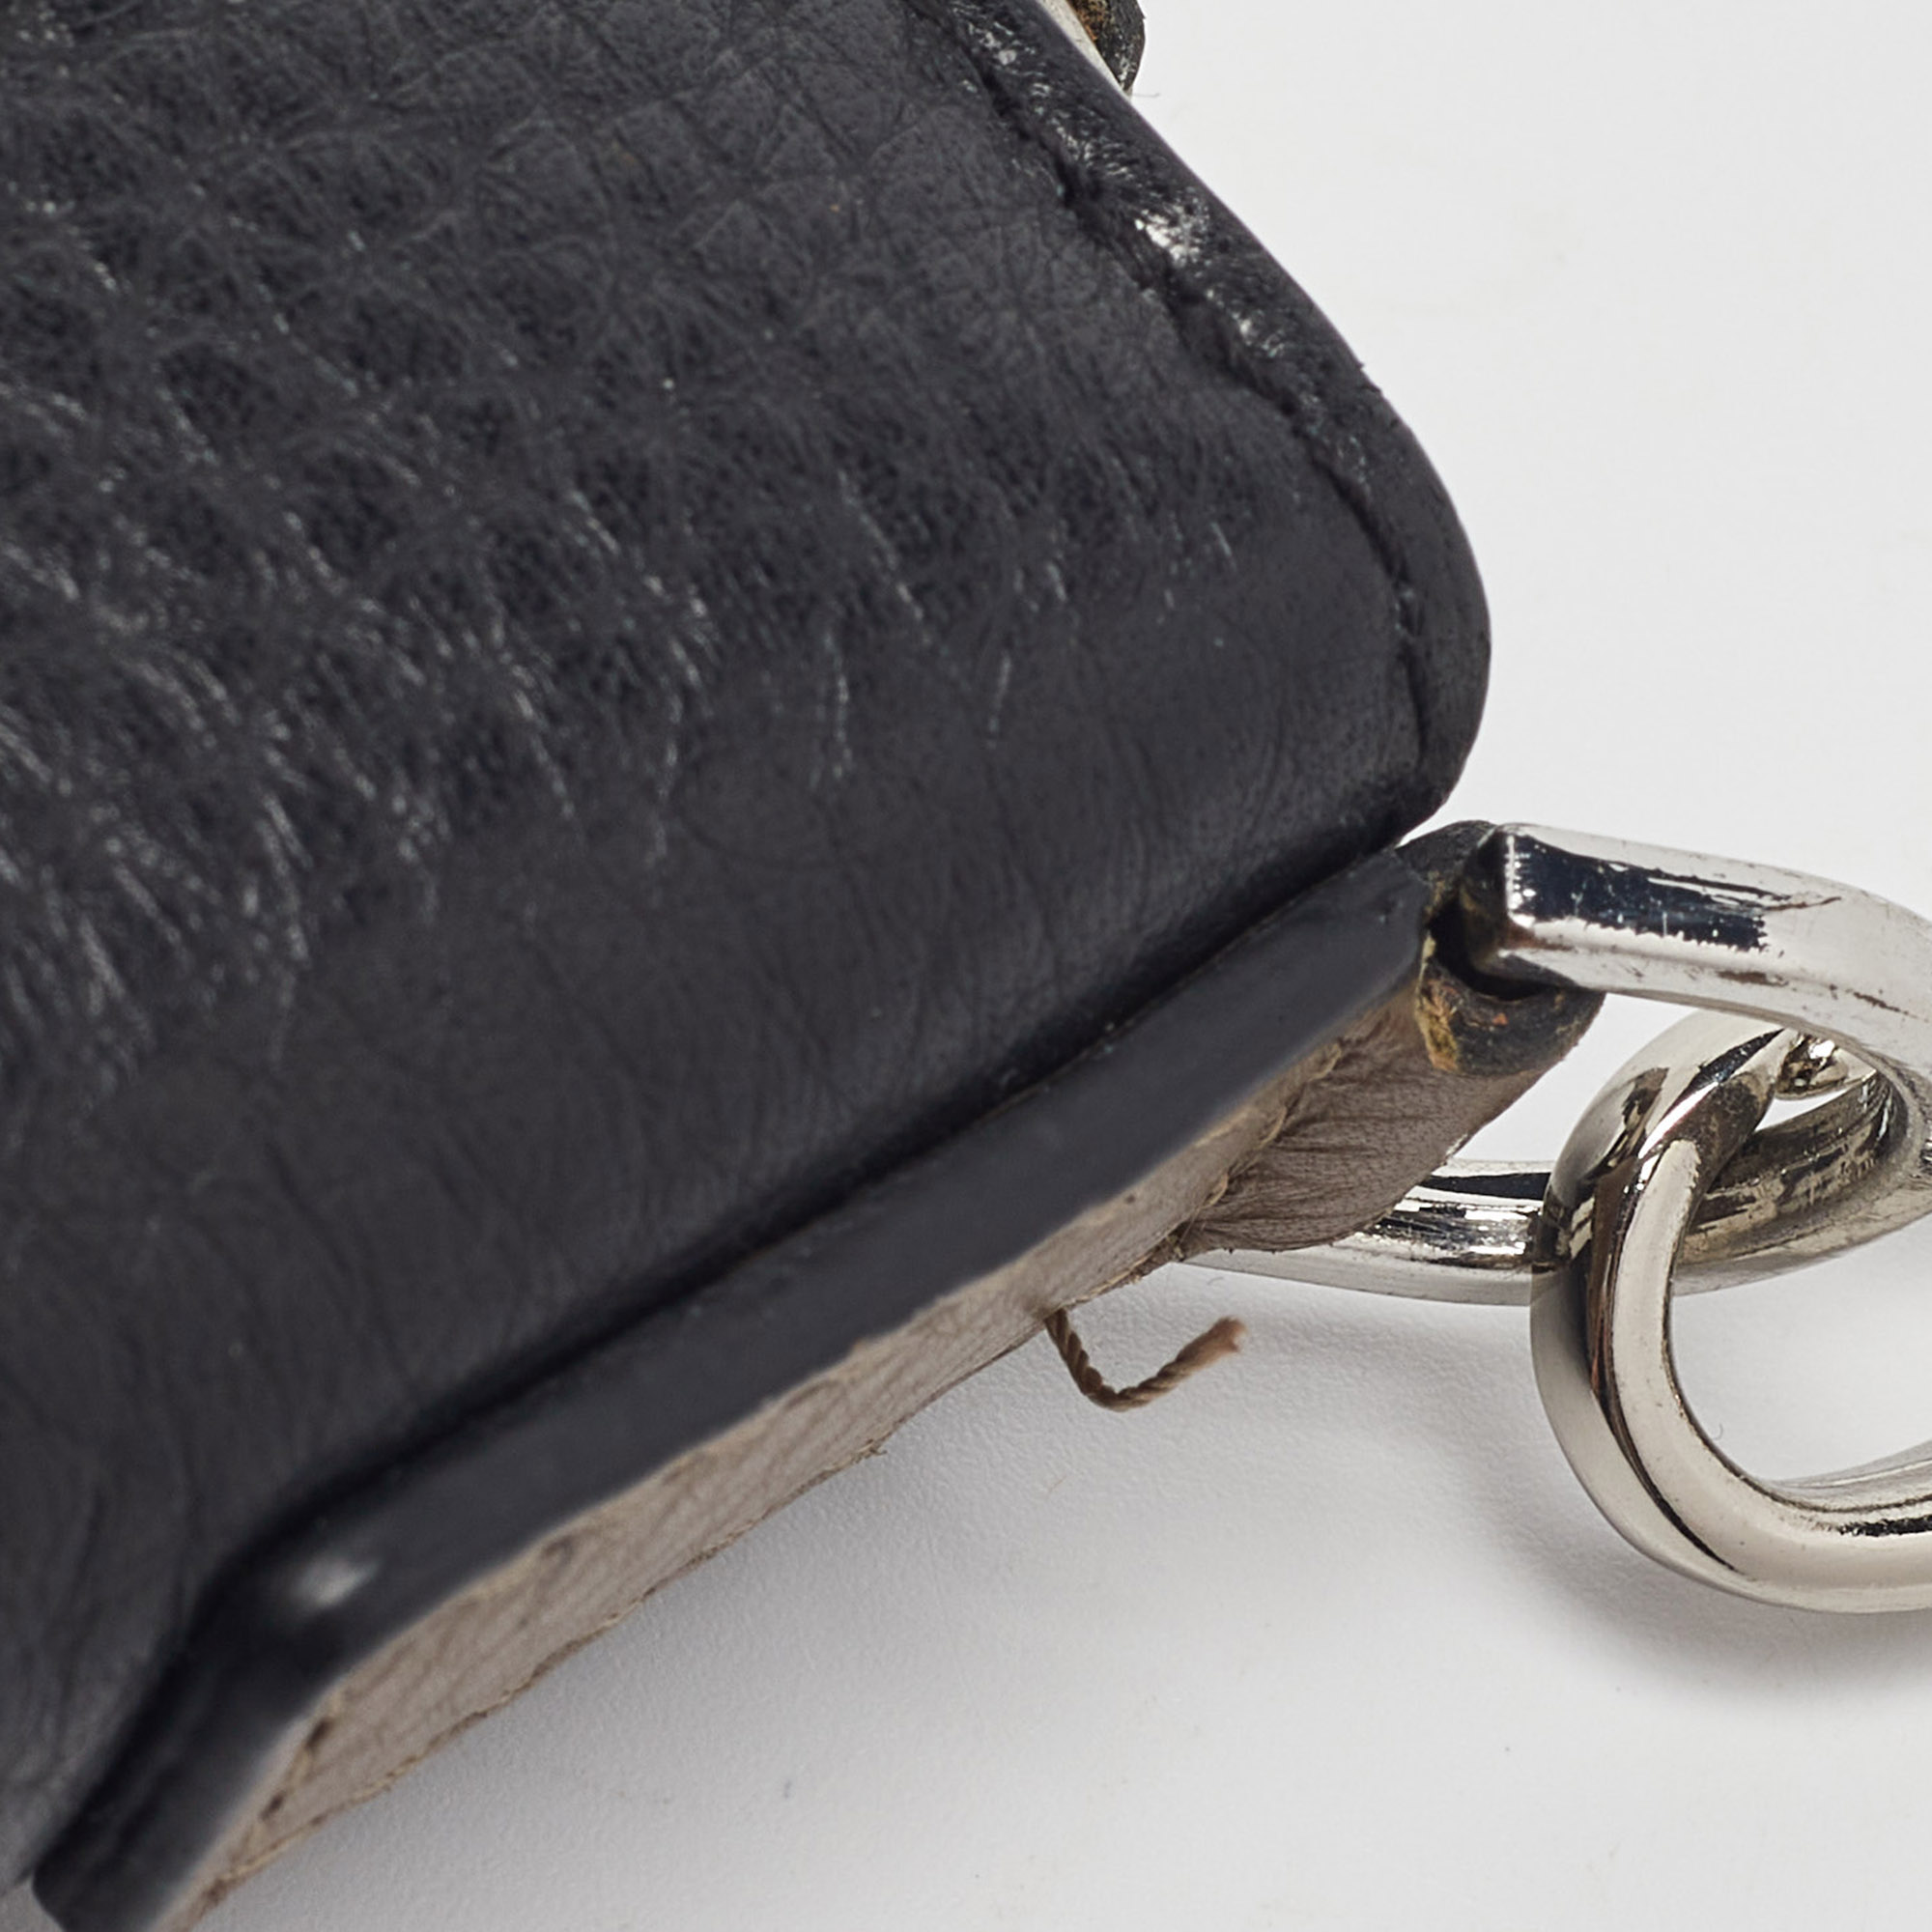 Cerruti 1881 Black/Tan Leather Cerrutic Zip Around Wristlet Wallet